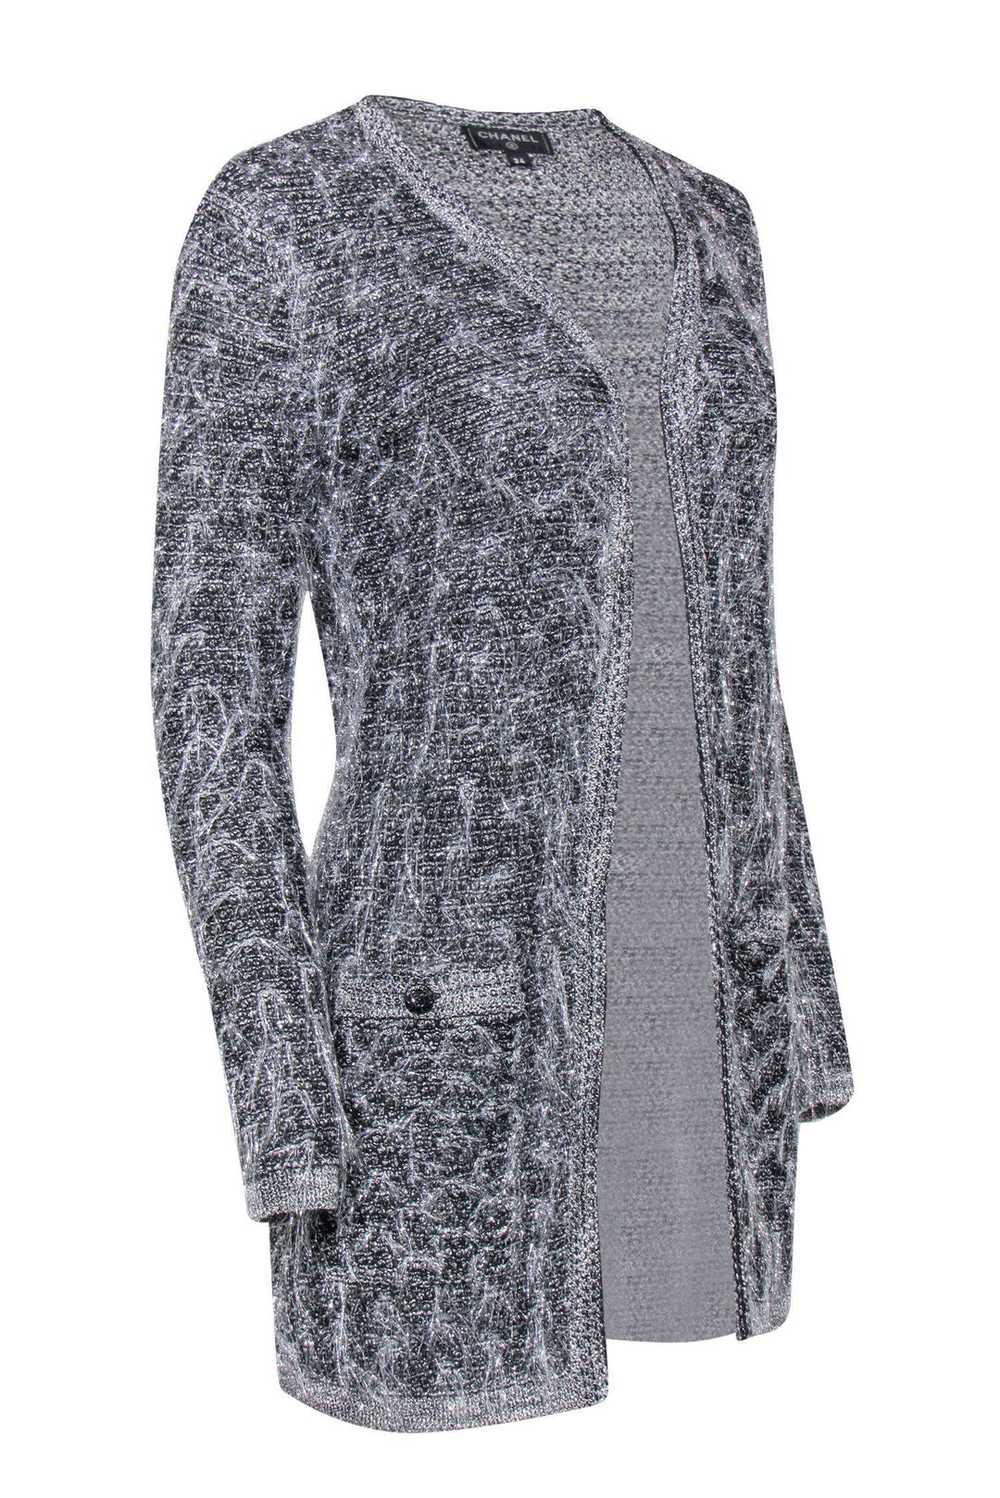 Chanel - Black & Silver Metallic Streamer Knit Ca… - image 2